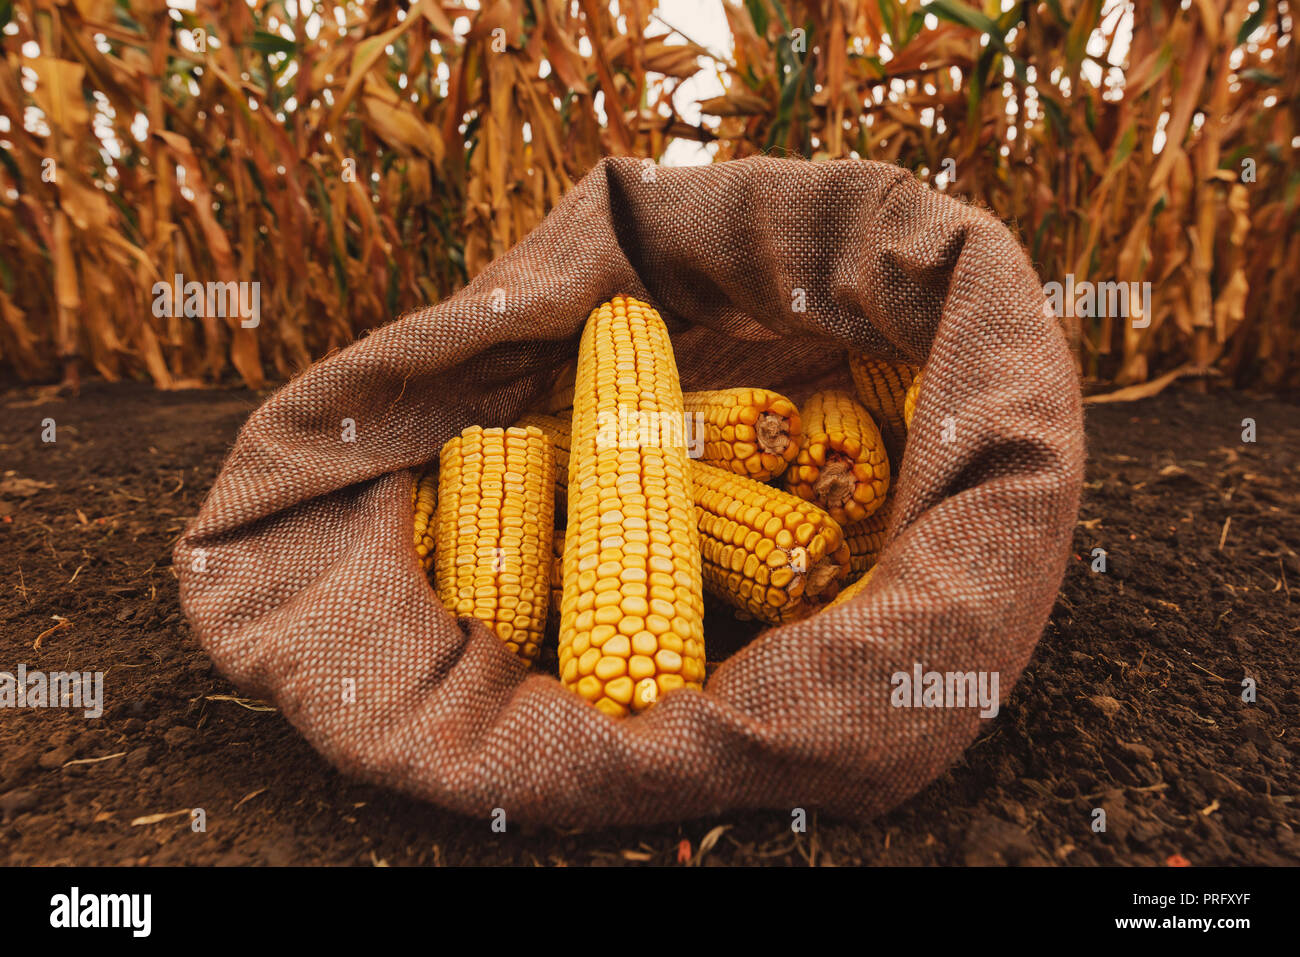 Harvested corn cobs in burlap sack left in the field Stock Photo